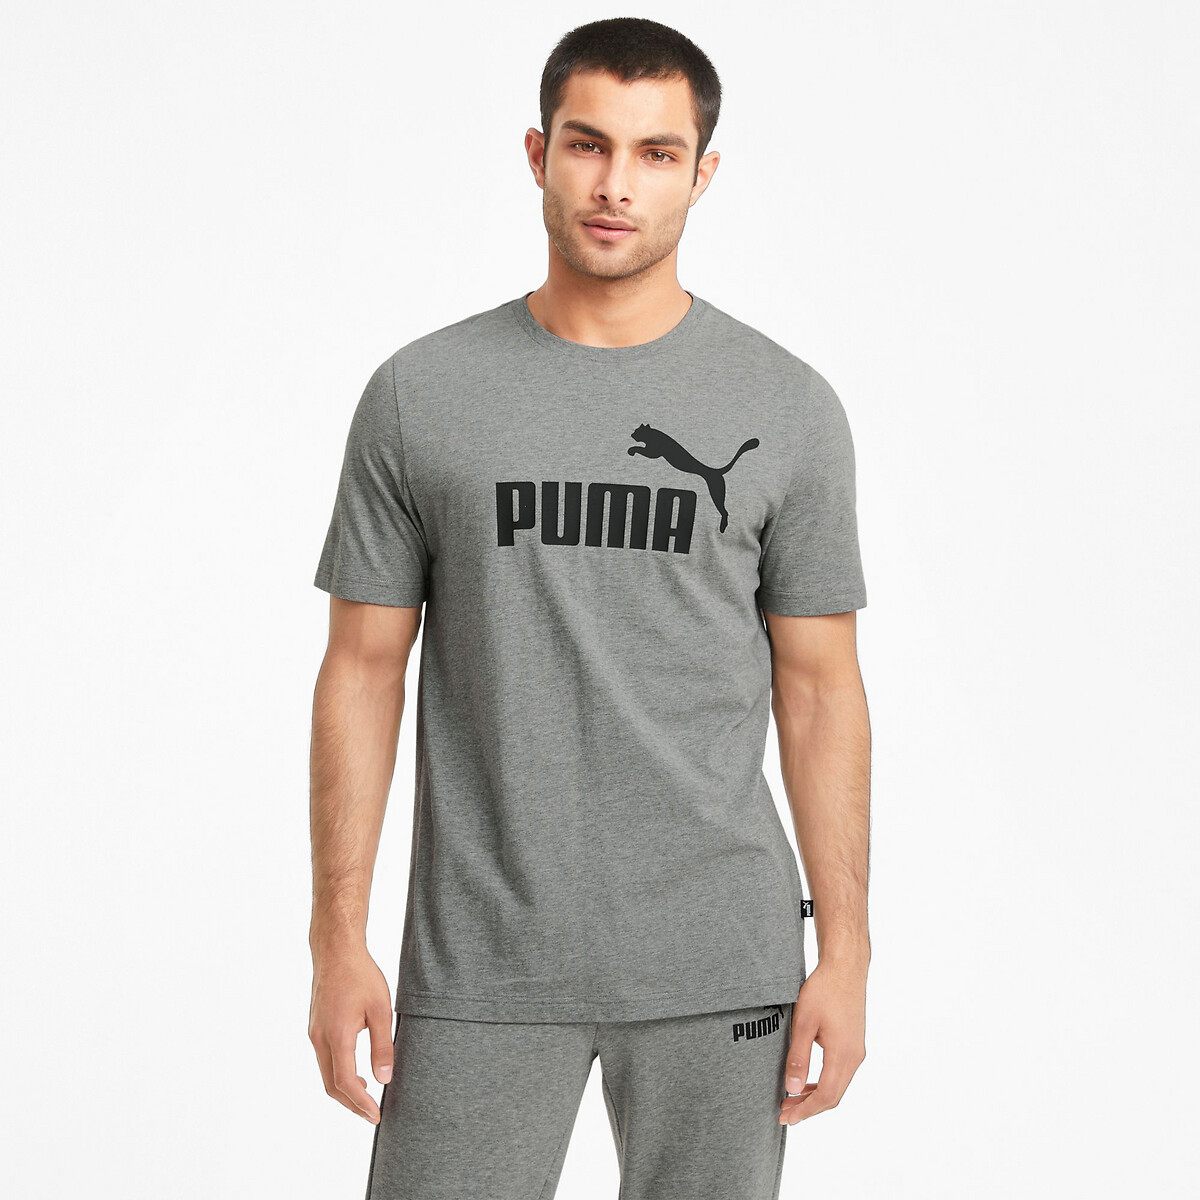 T-shirt essentiel, grosses logo La Redoute meliert Puma grau 